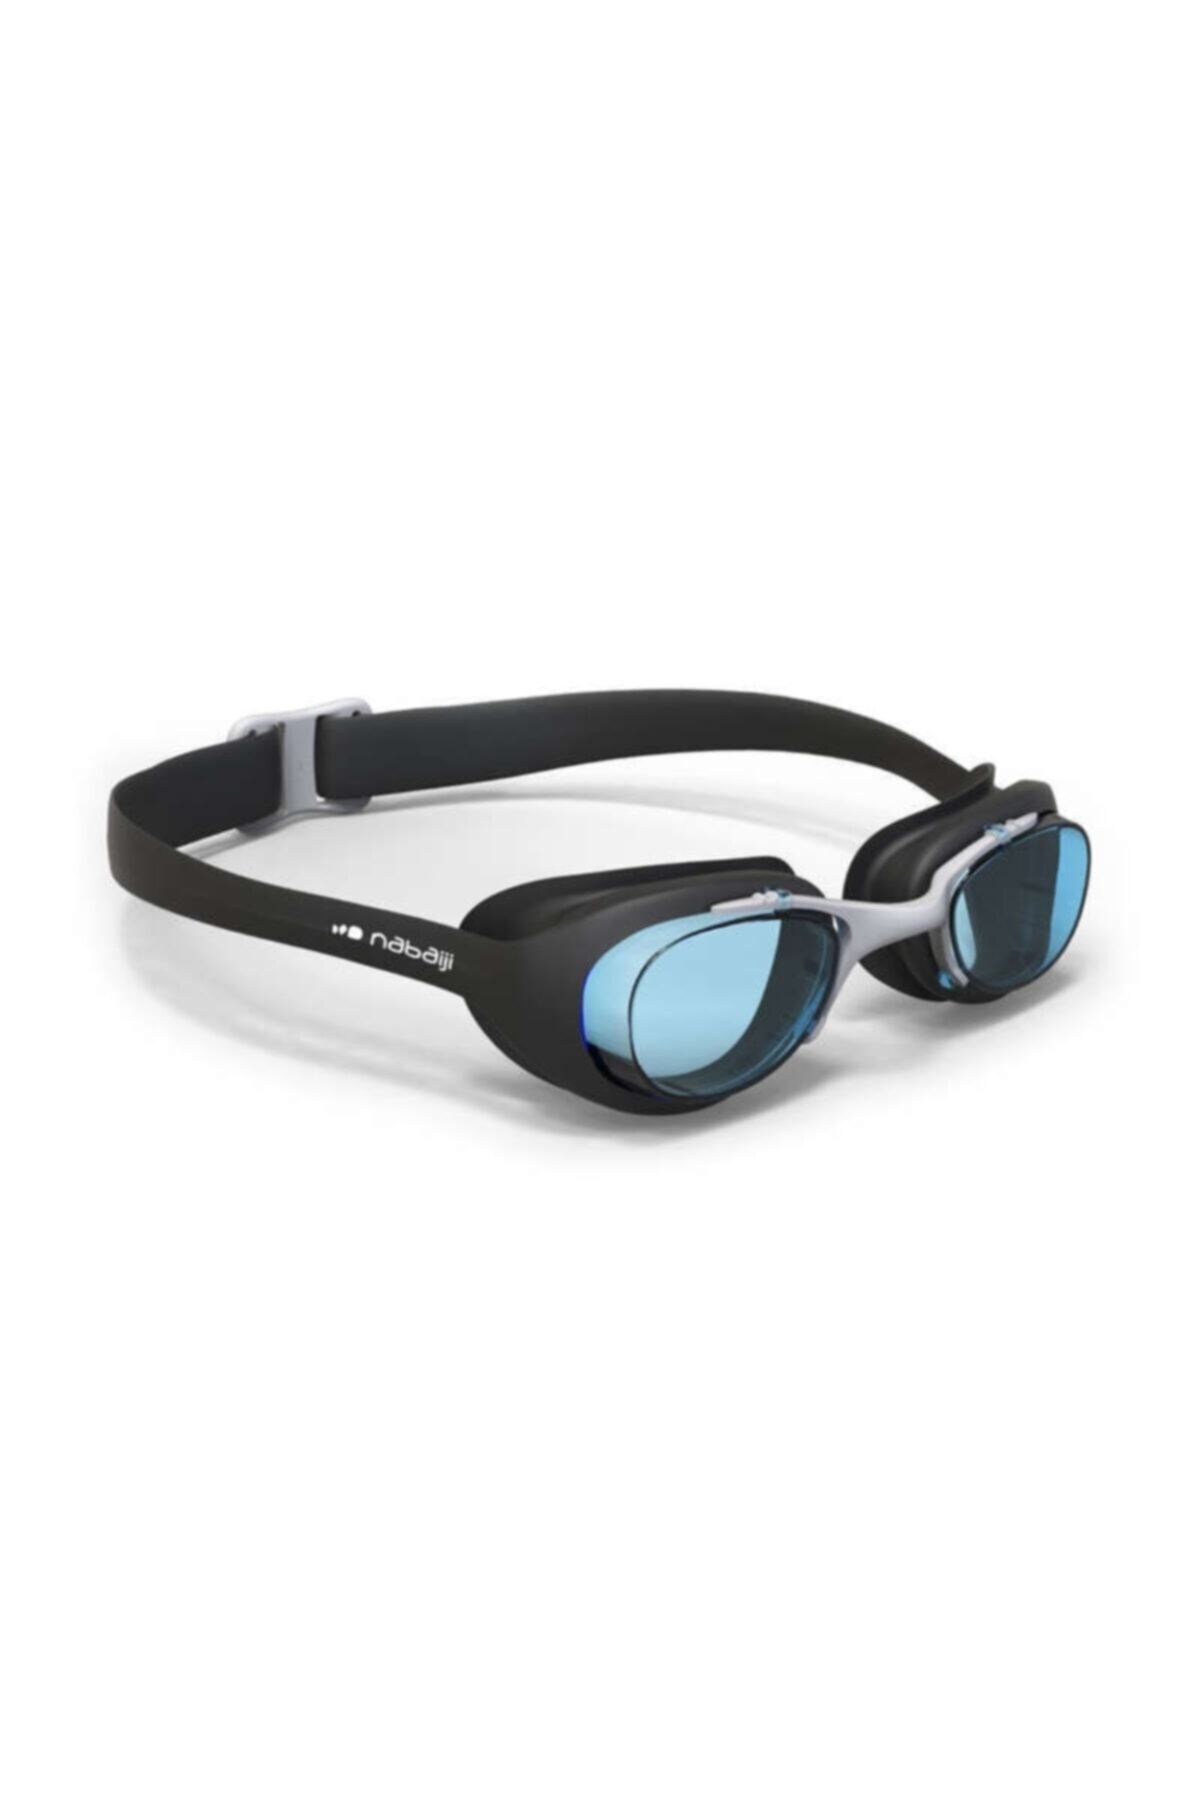 Decathlon Yüzücü Gözlüğü Siyah L Boy Şeffaf Camlar Xbase Nabaıjı